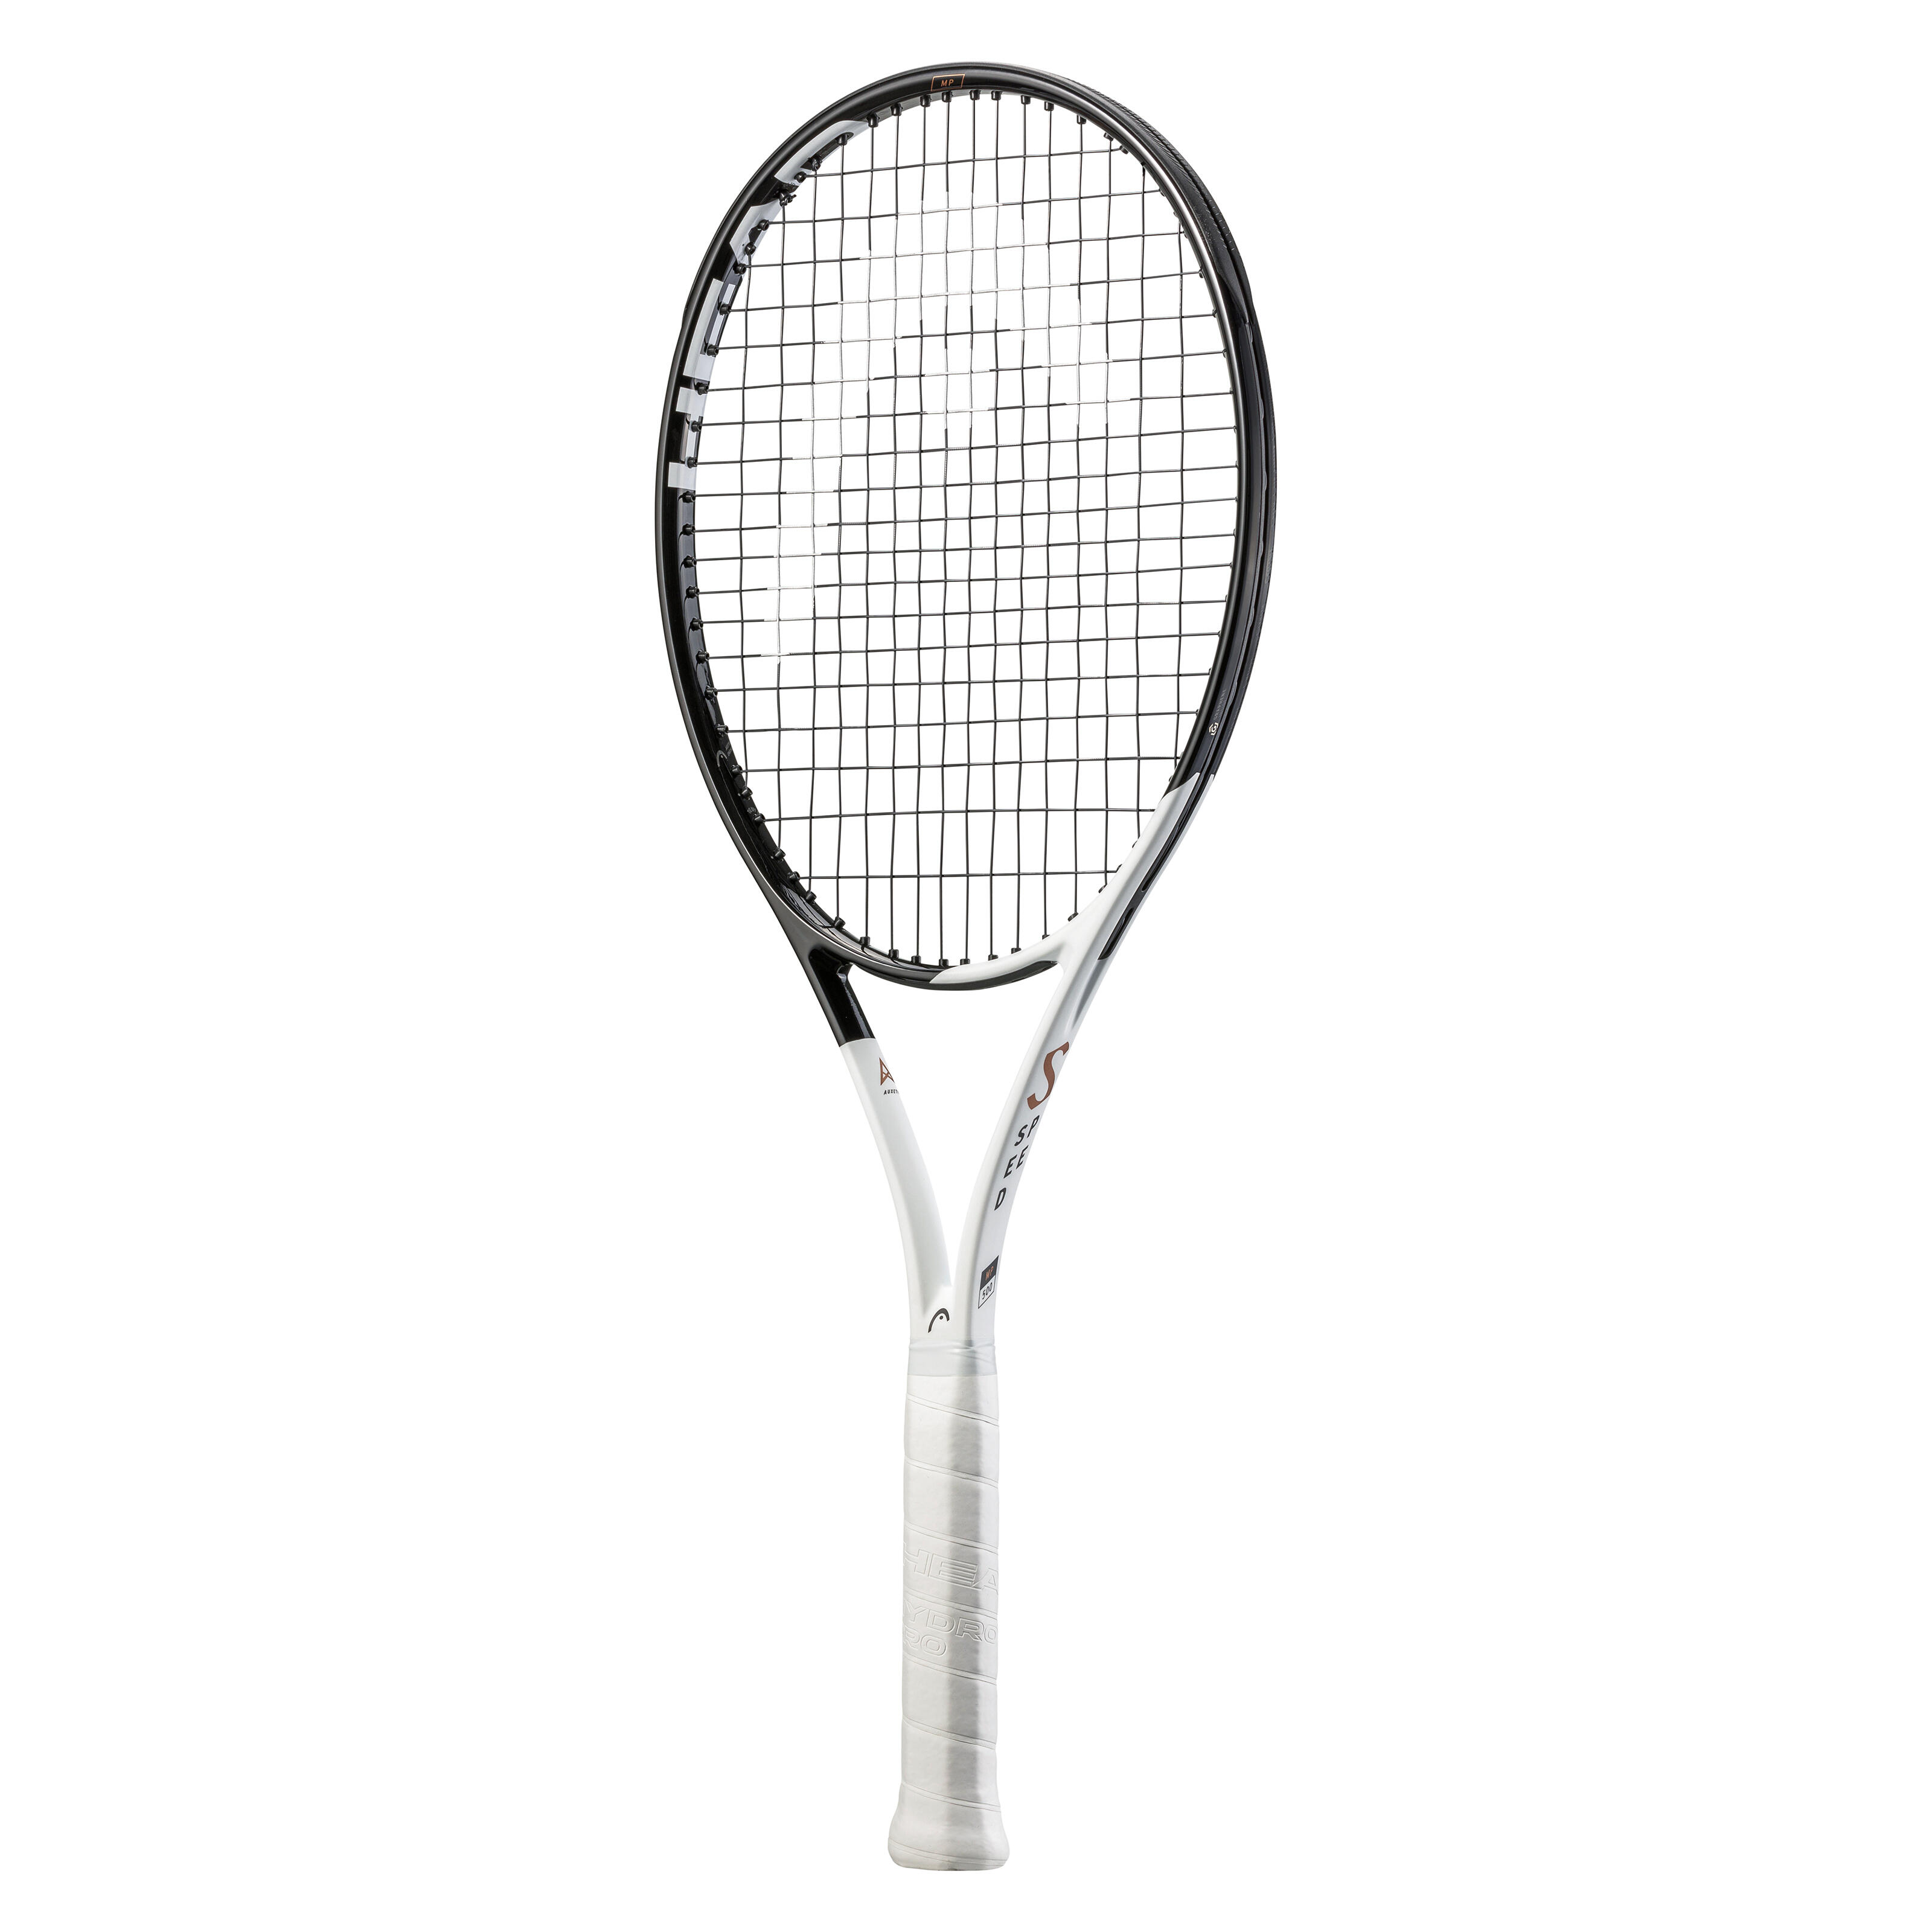 Rachetă Tenis Head Auxetic Speed MP 300g Negru-Alb Adulți decathlon.ro  Rachete de tenis